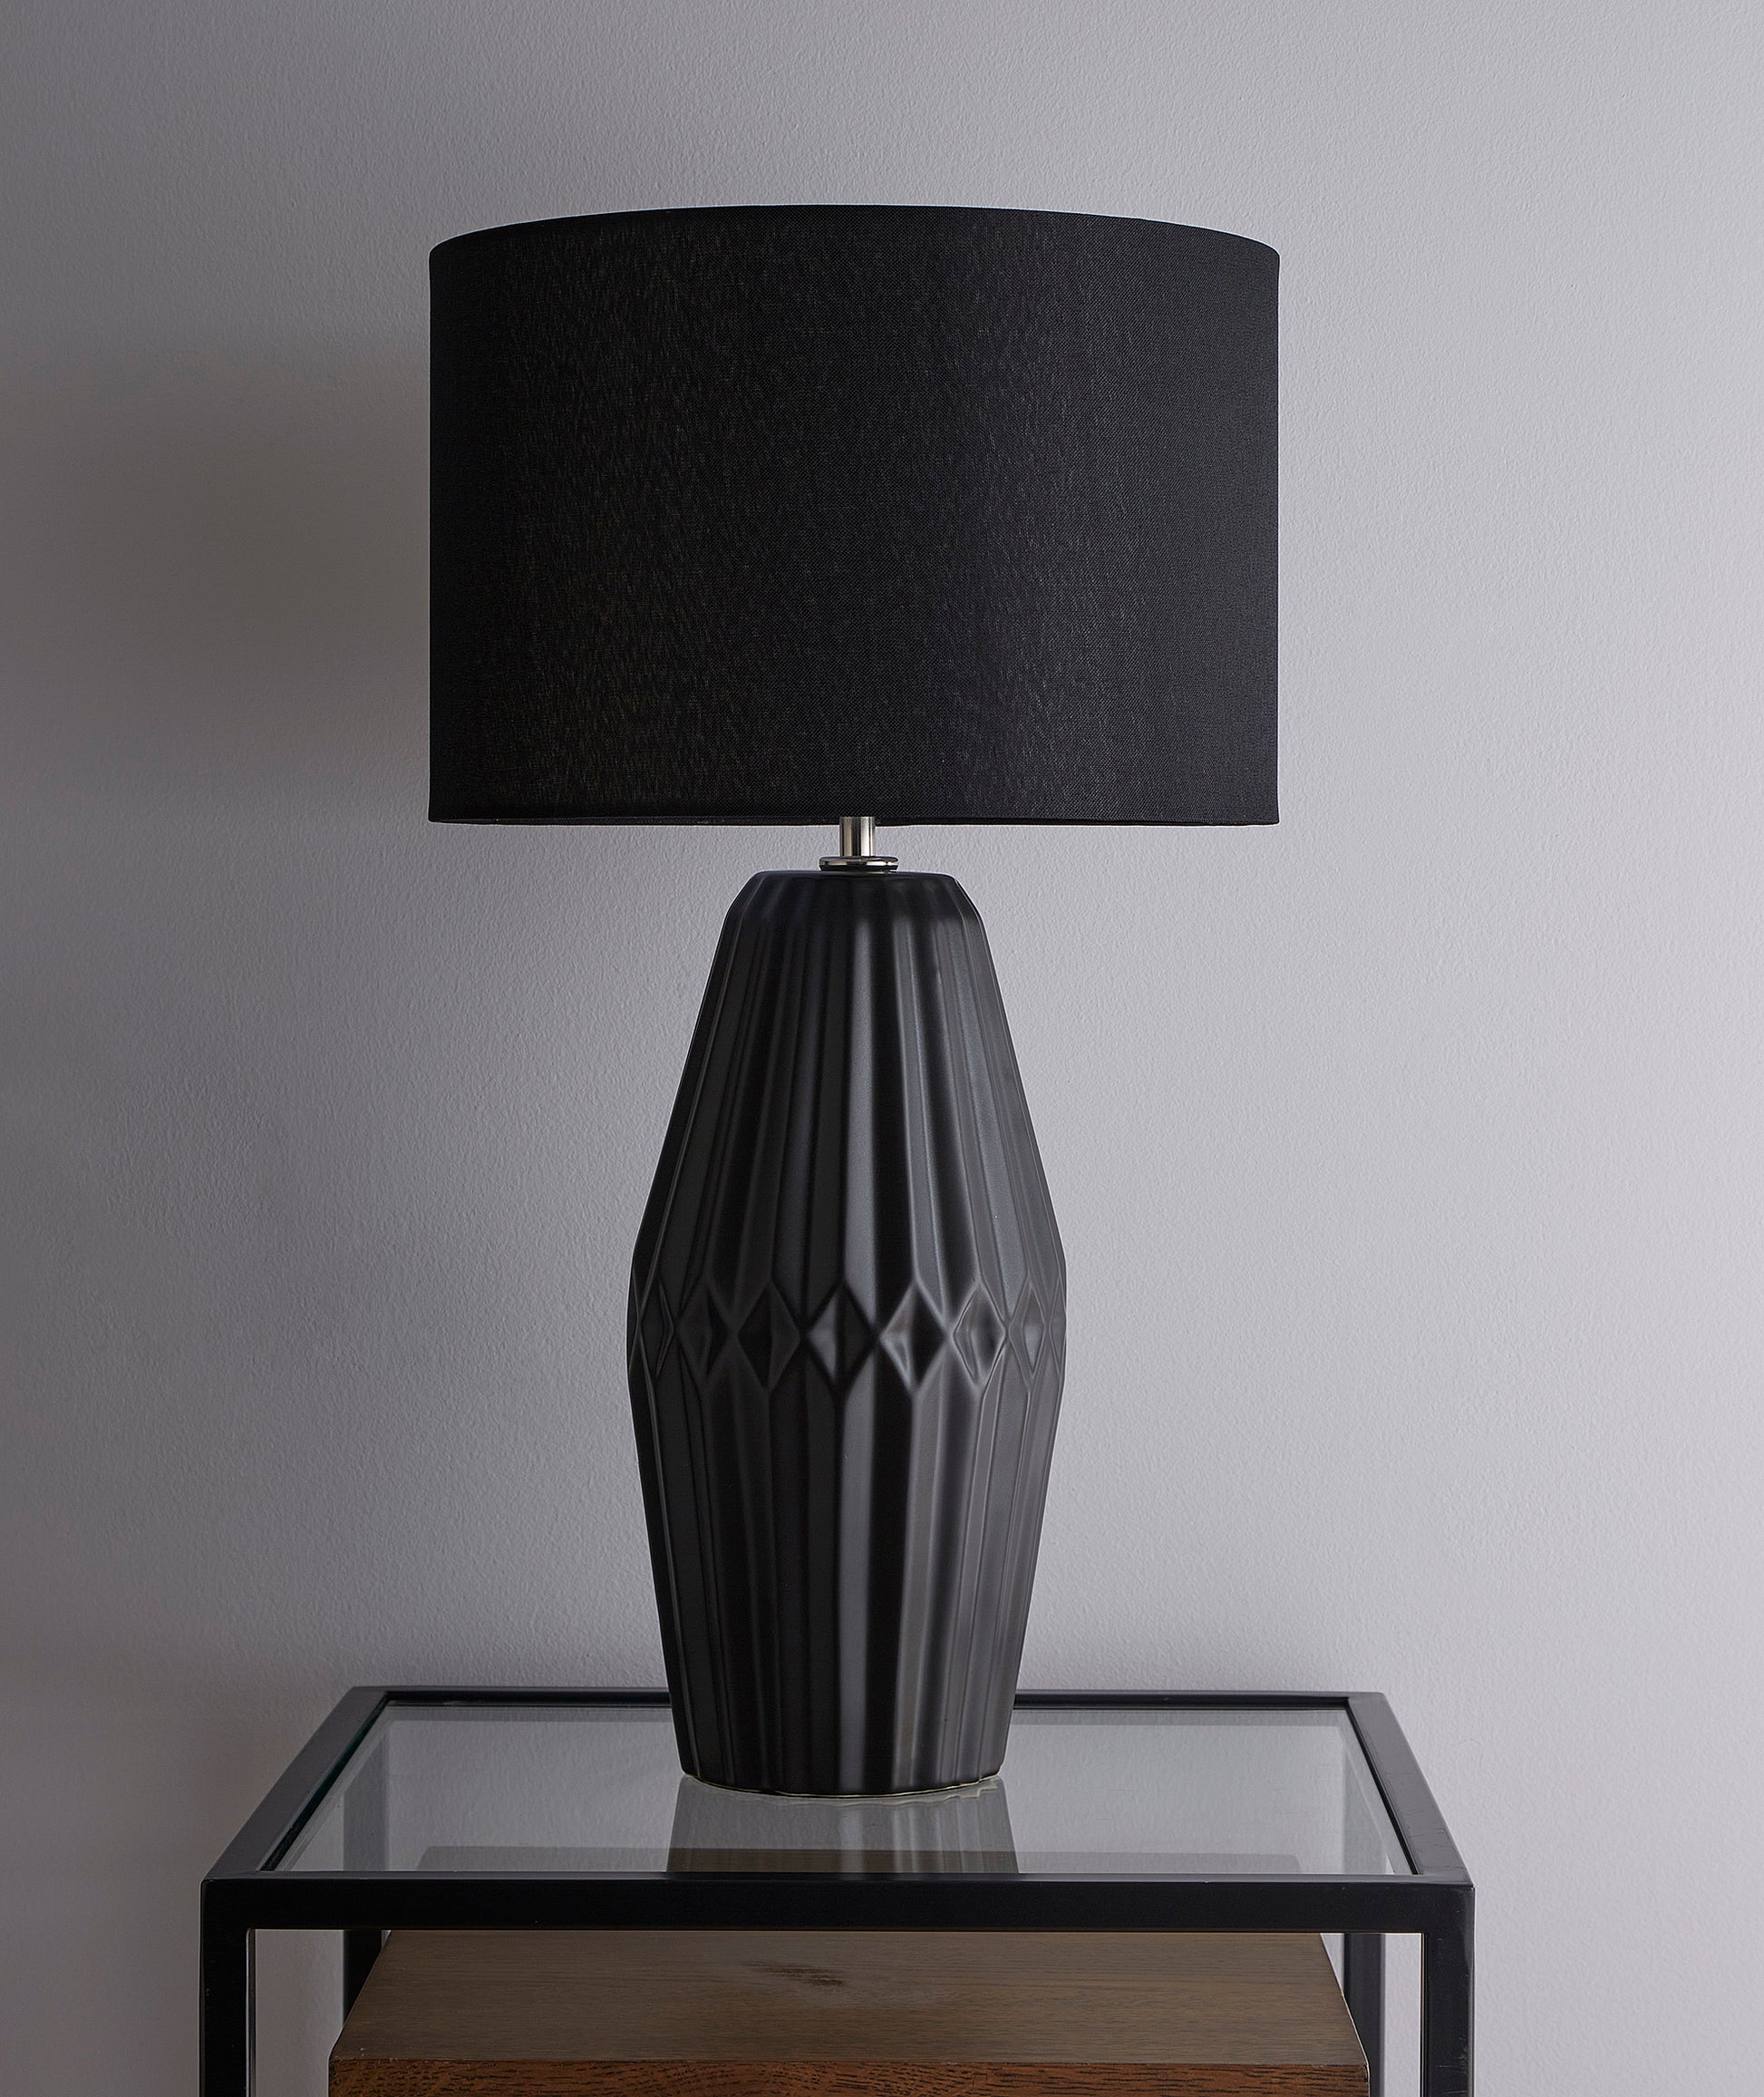 Nyon 54cm Black Ceramic Table Lamp With Matching Black shade for stunning decor finish